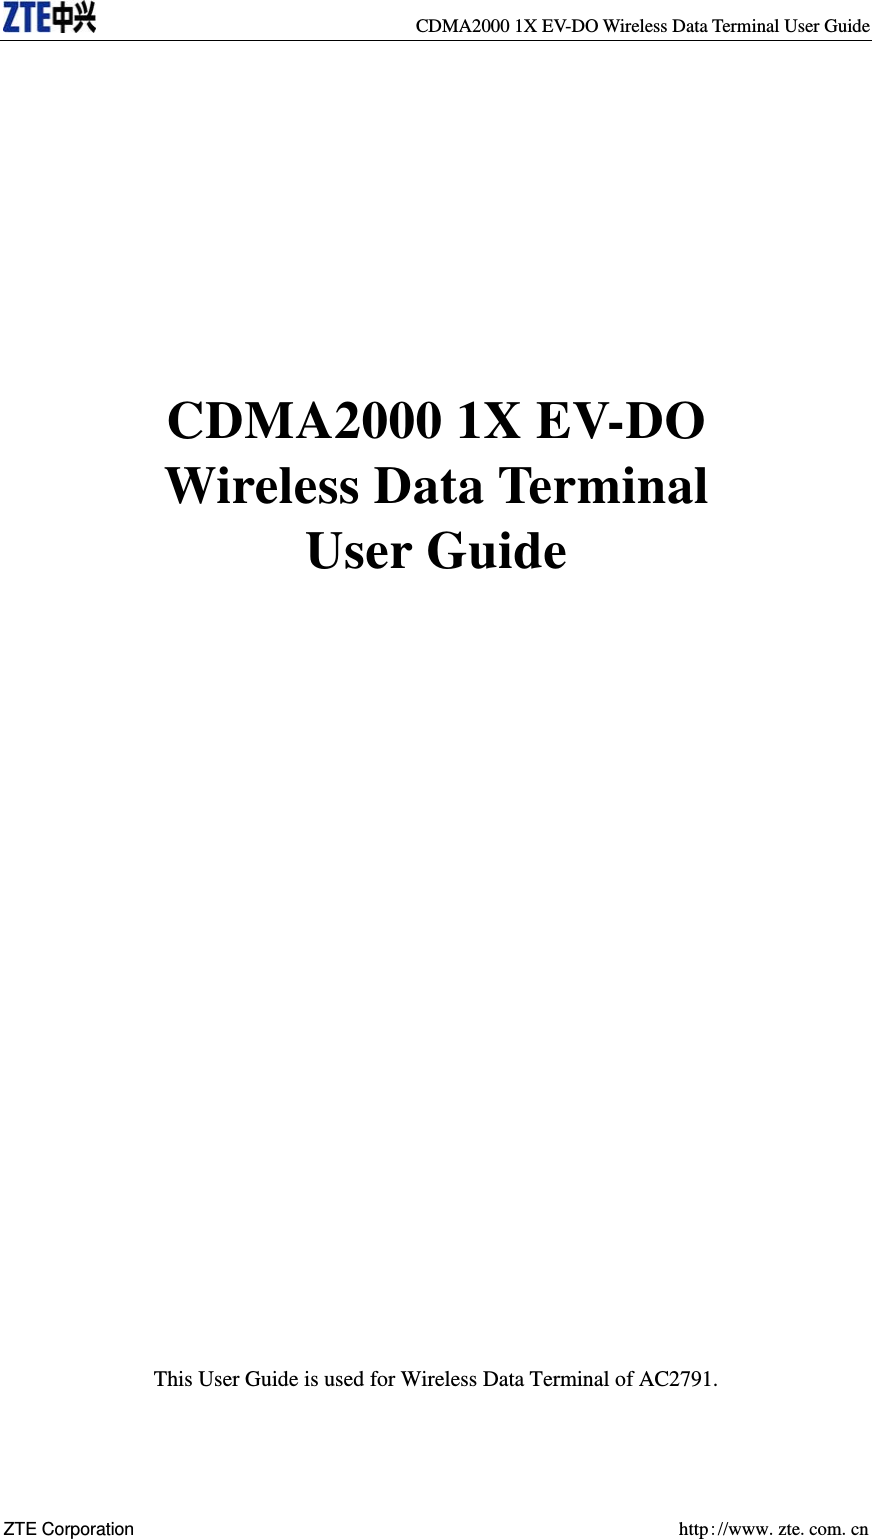   CDMA2000 1X EV-DO Wireless Data Terminal User Guide ZTE Corporation  http://www.zte.com.cn        CDMA2000 1X EV-DO Wireless Data Terminal User Guide                         This User Guide is used for Wireless Data Terminal of AC2791. 